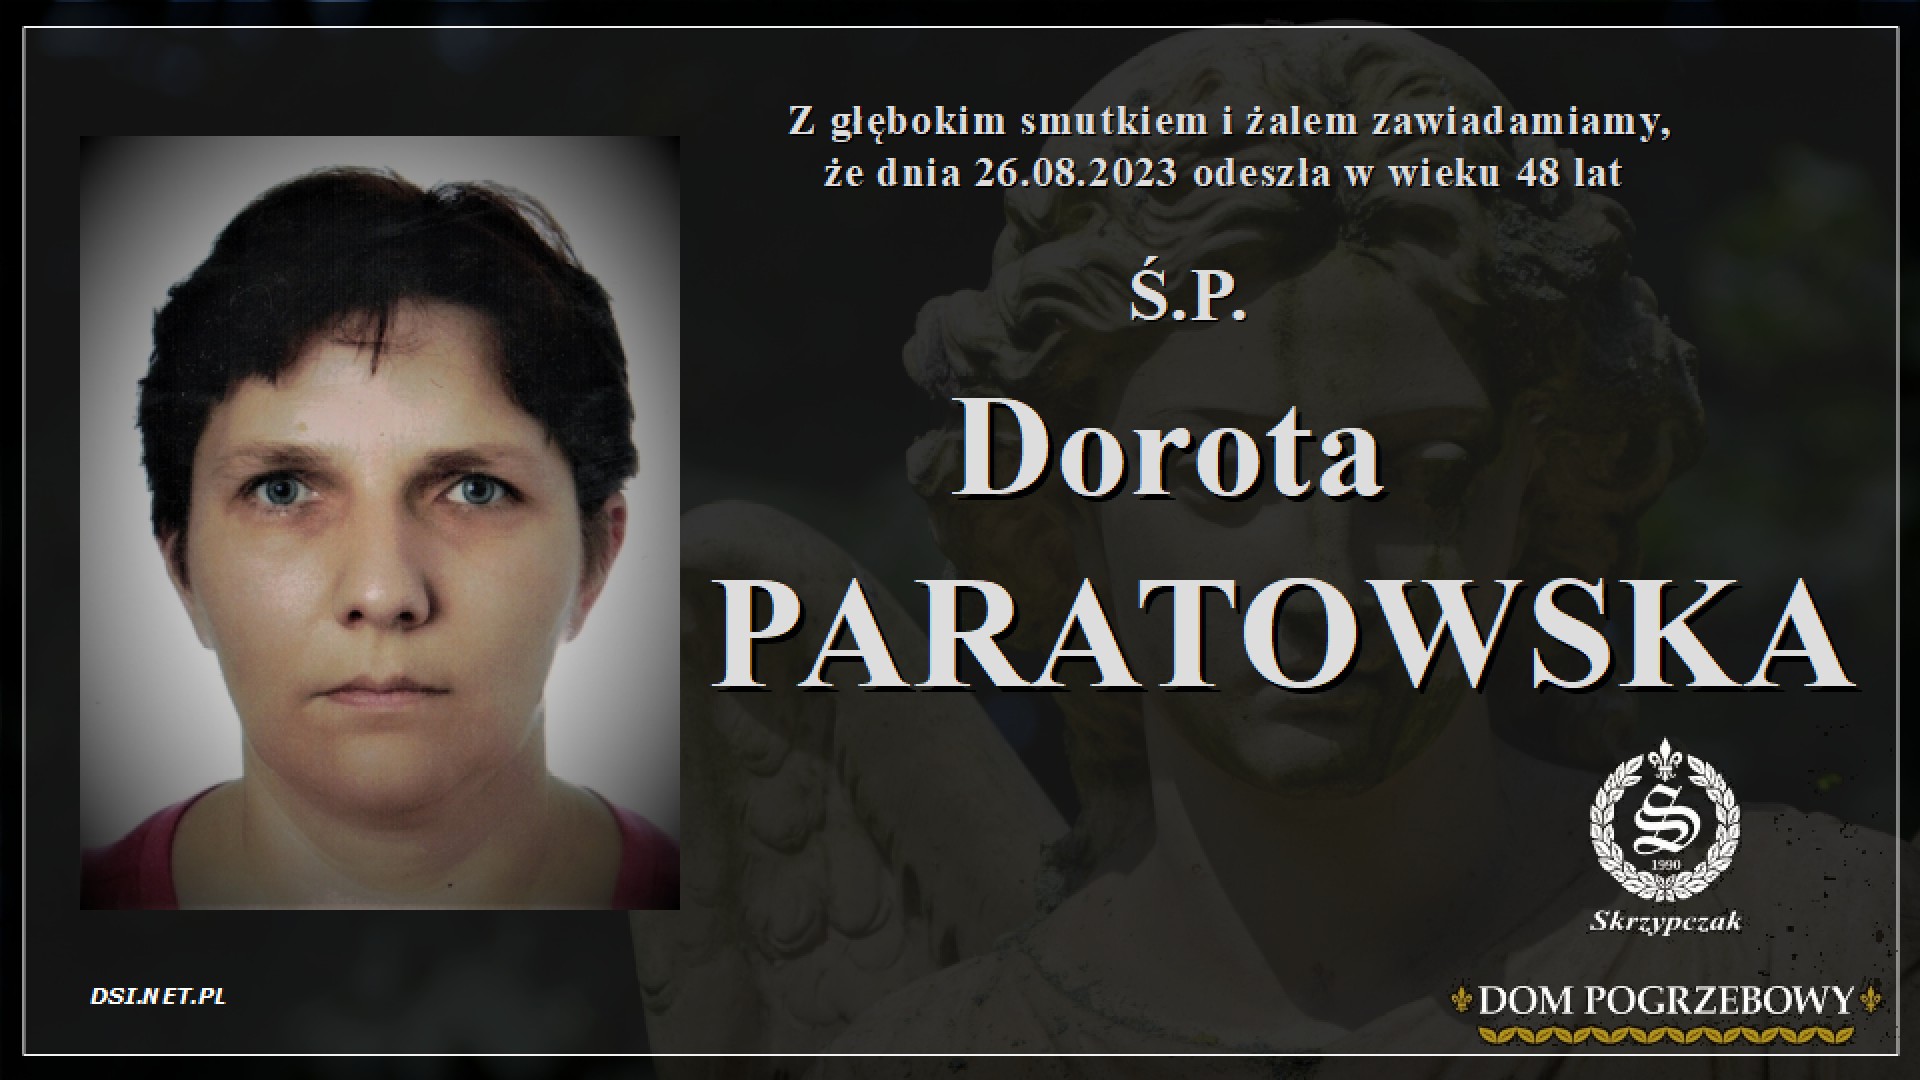 Ś.P. Dorota Paratowska